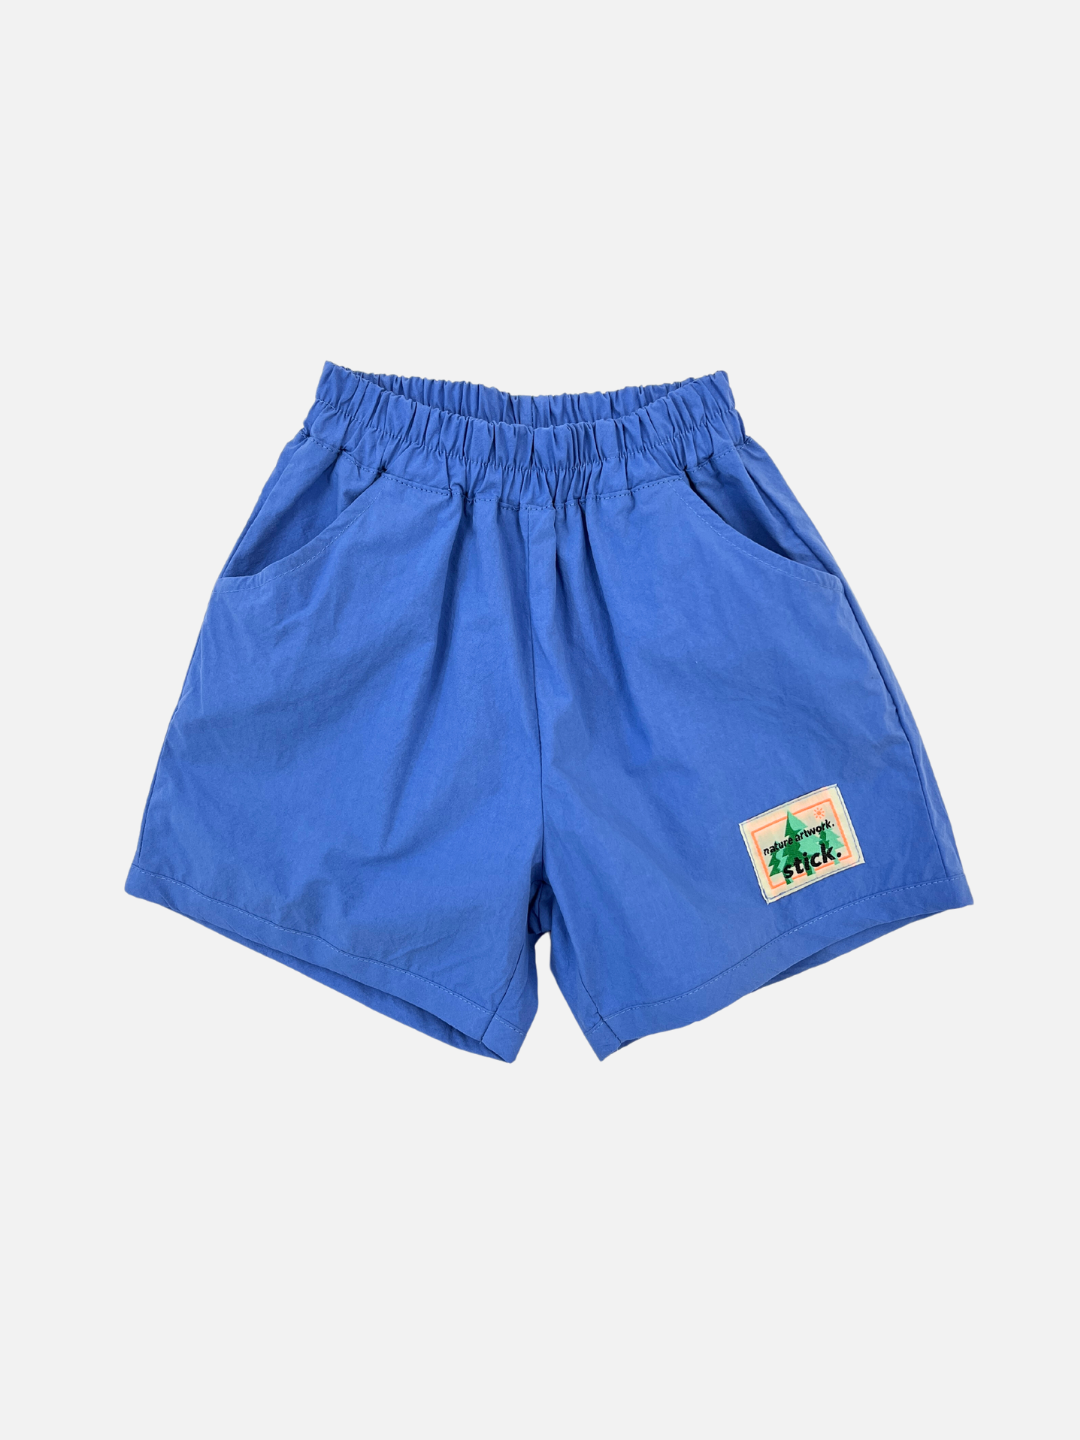 Blue Raspberry | Blue kids' shorts front view.